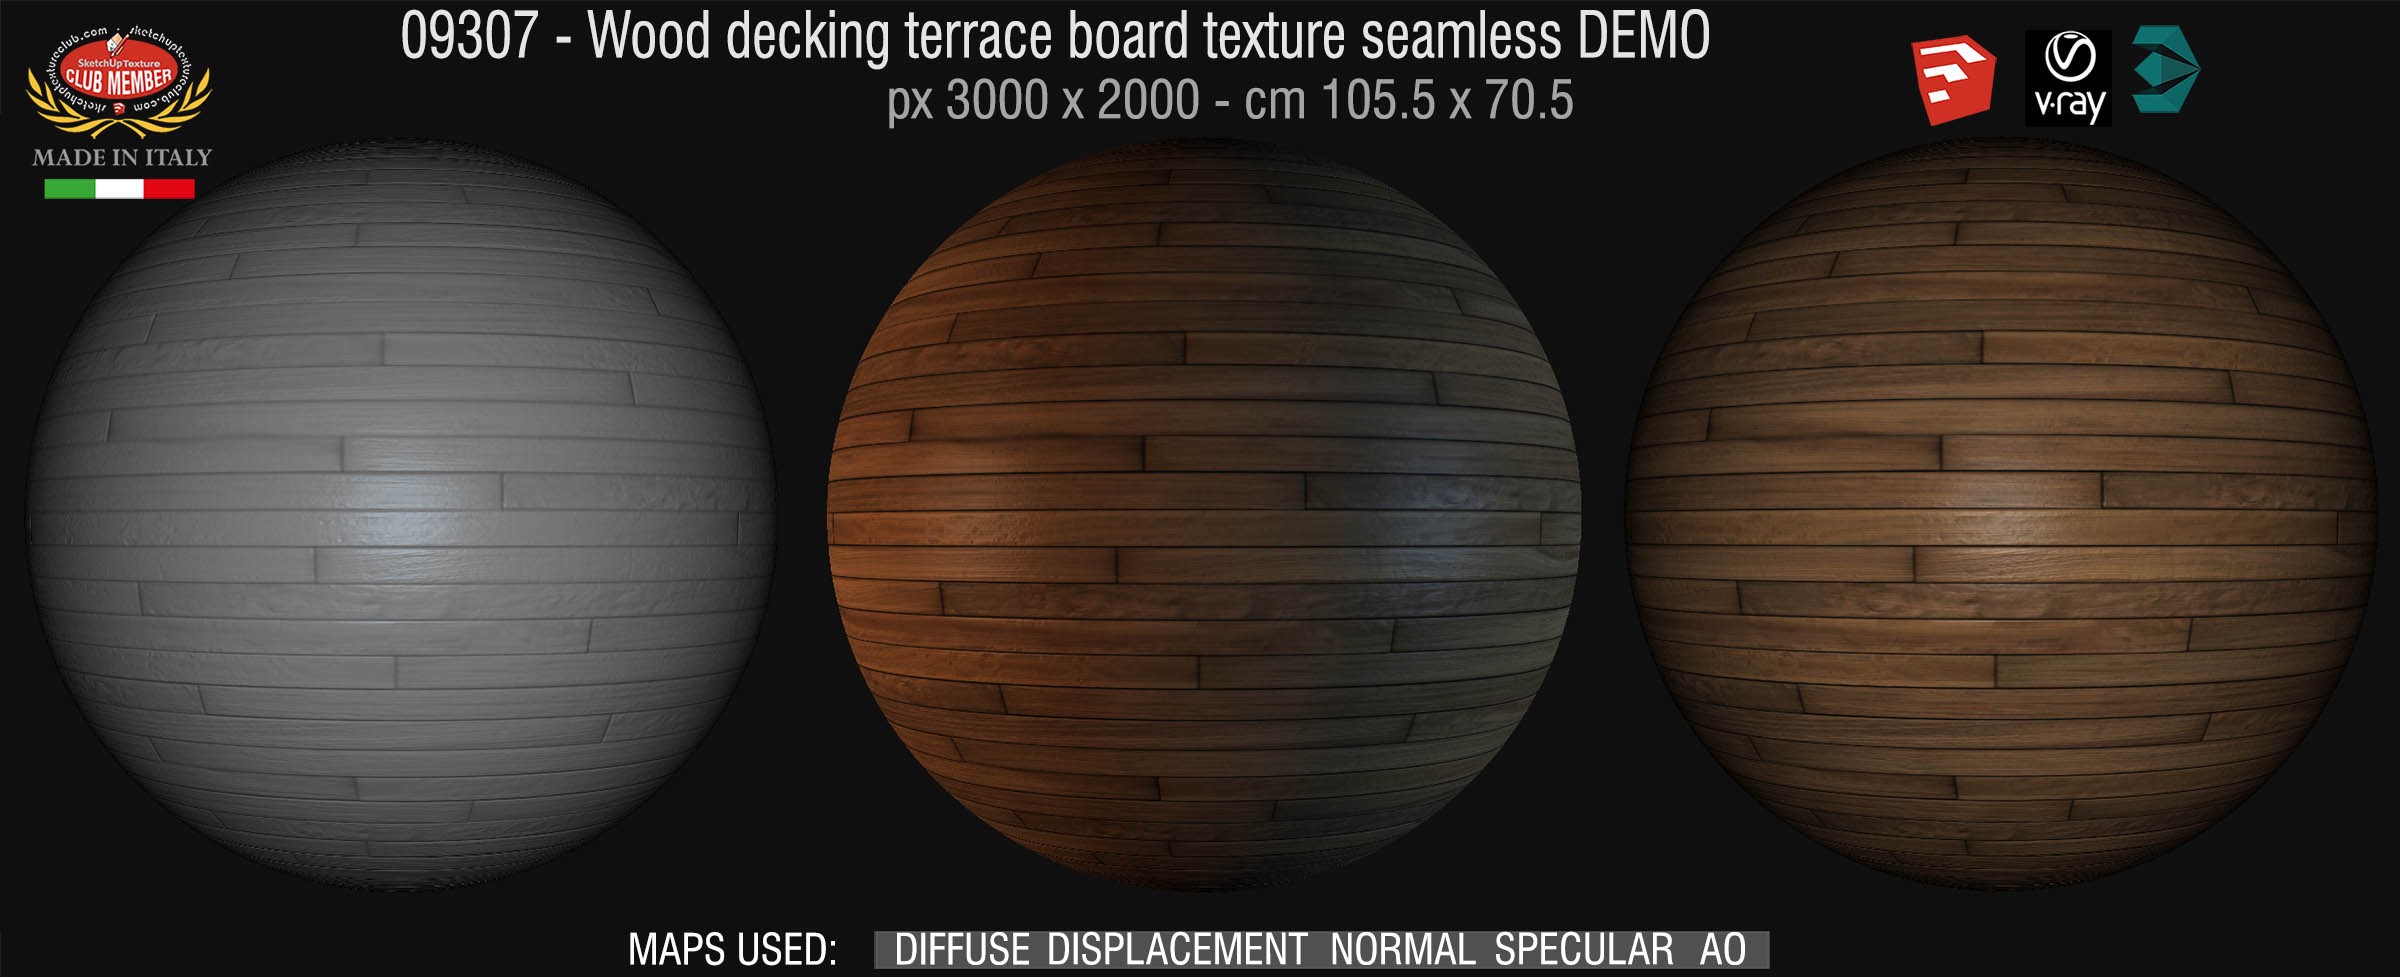 09307 HR Wood decking terrace board texture seamless + maps DEMO